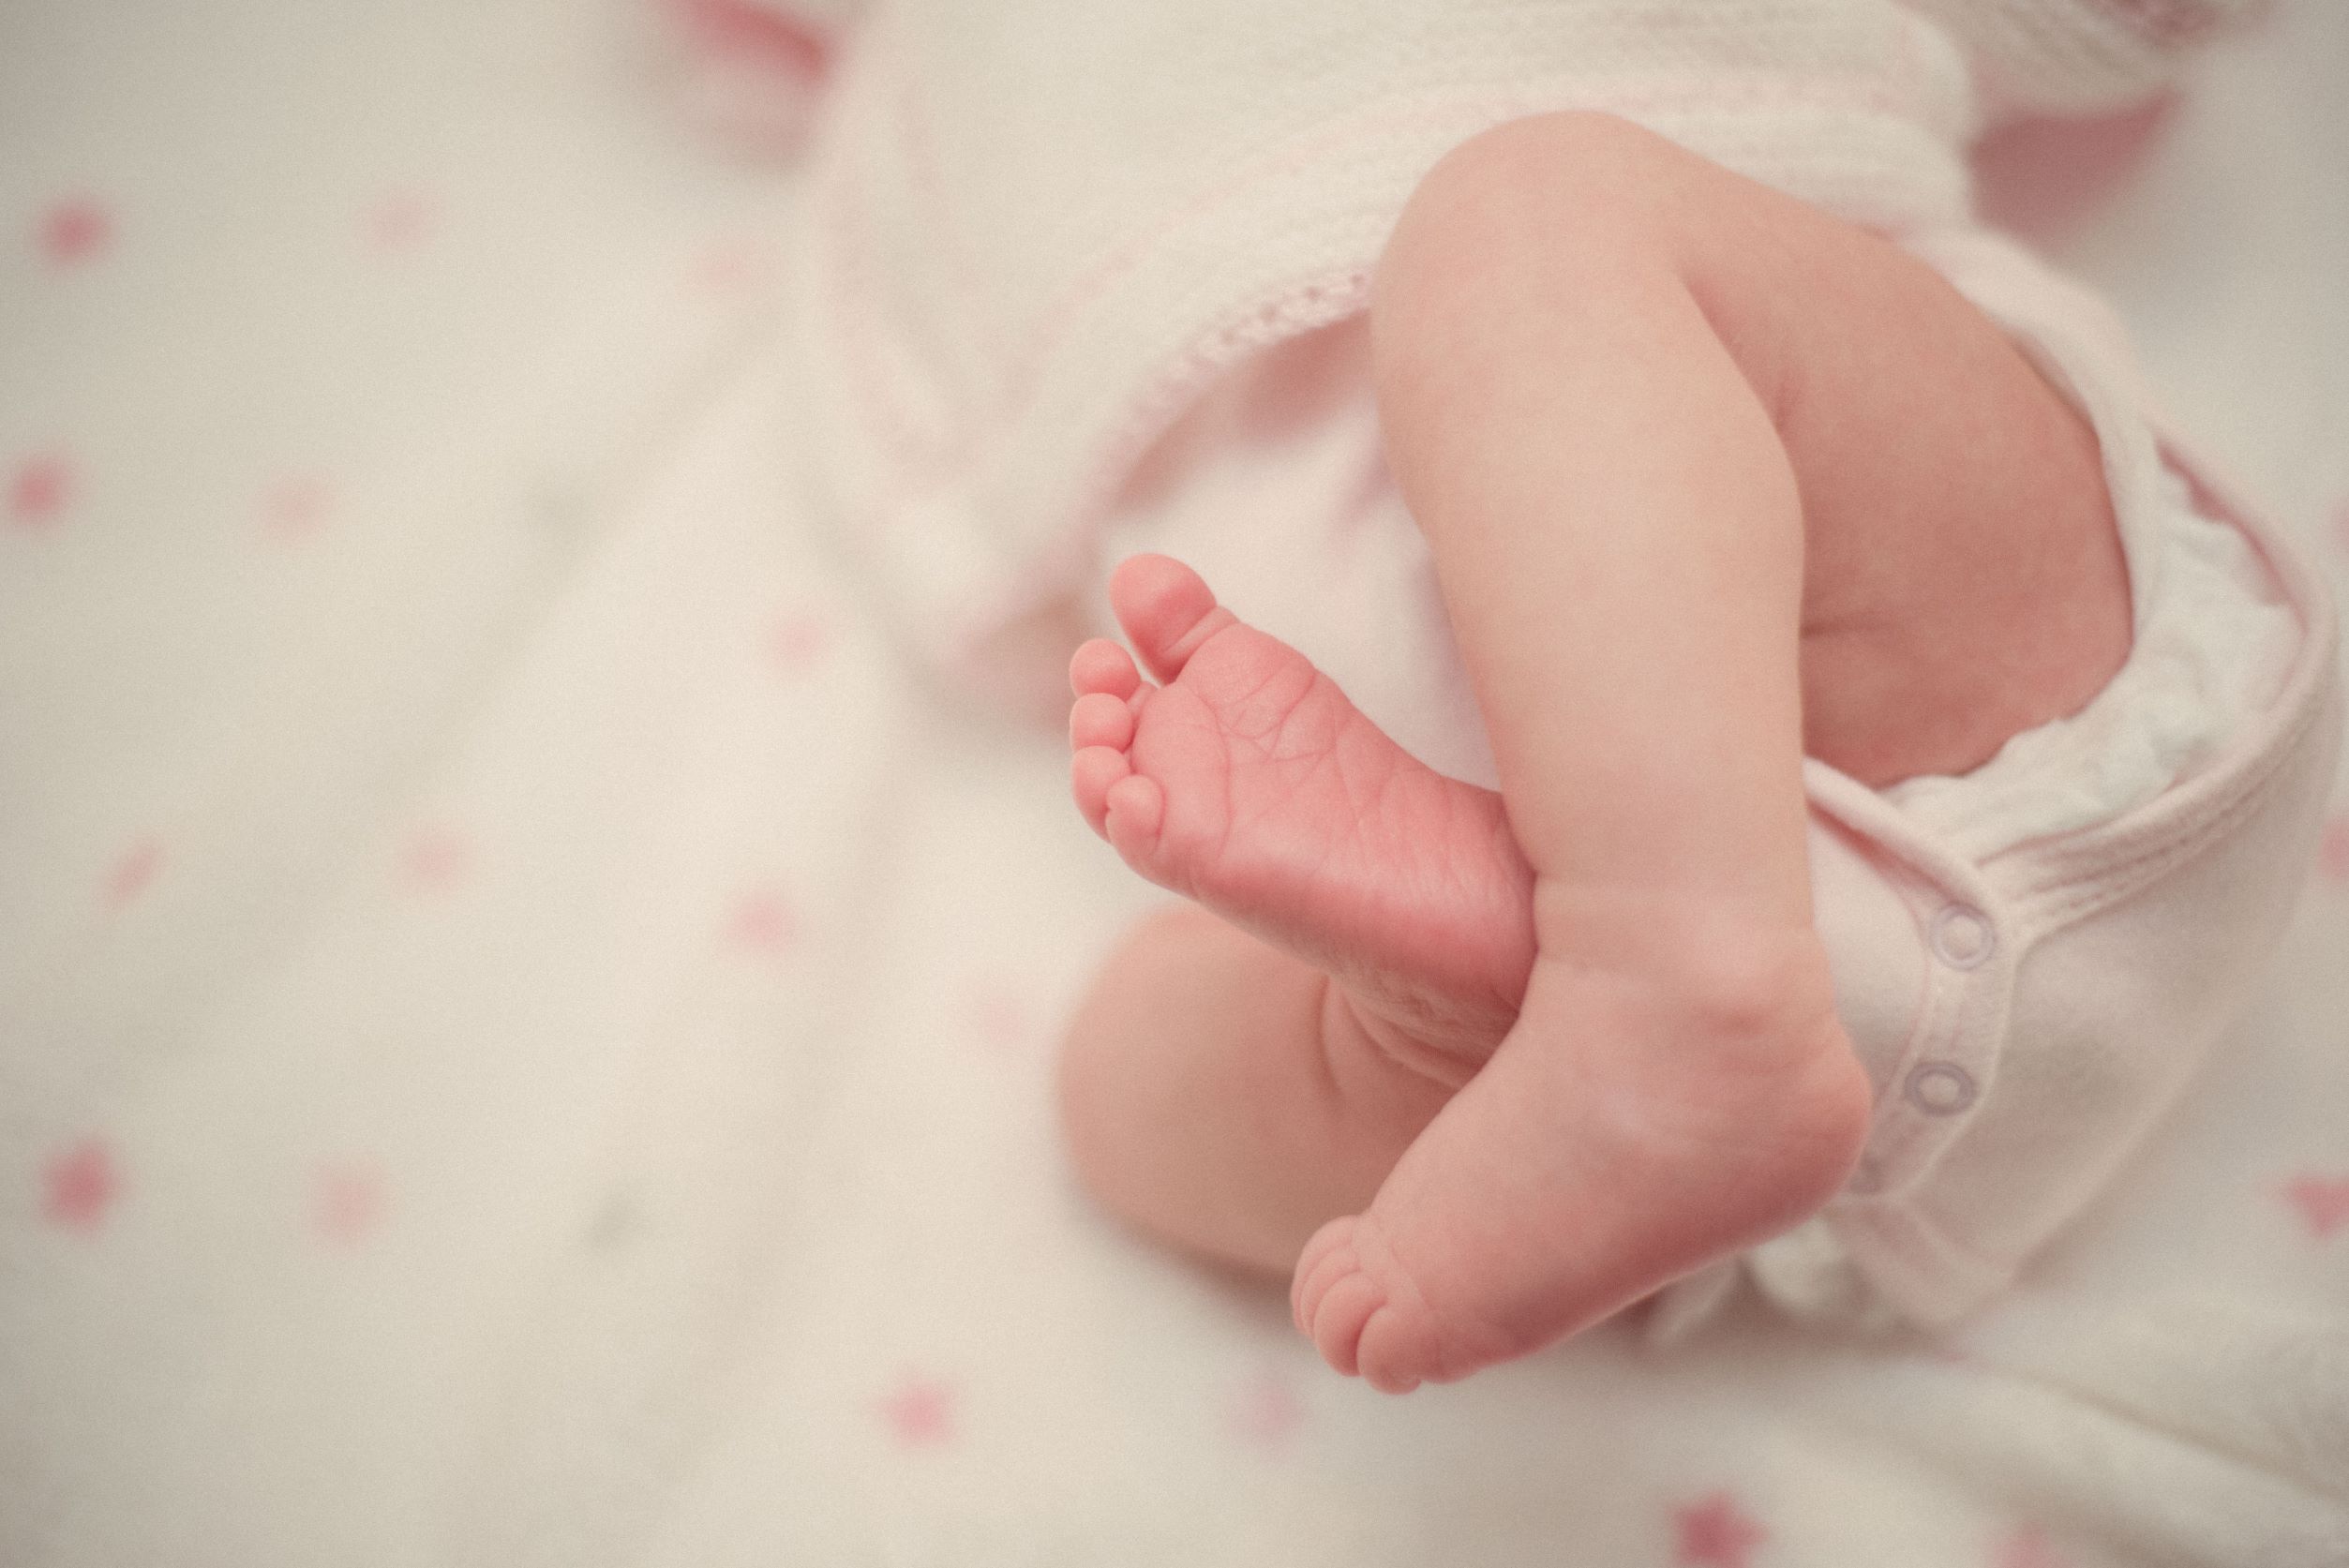 Ongoing Partnerships Promote Infant Safe Sleep Awareness